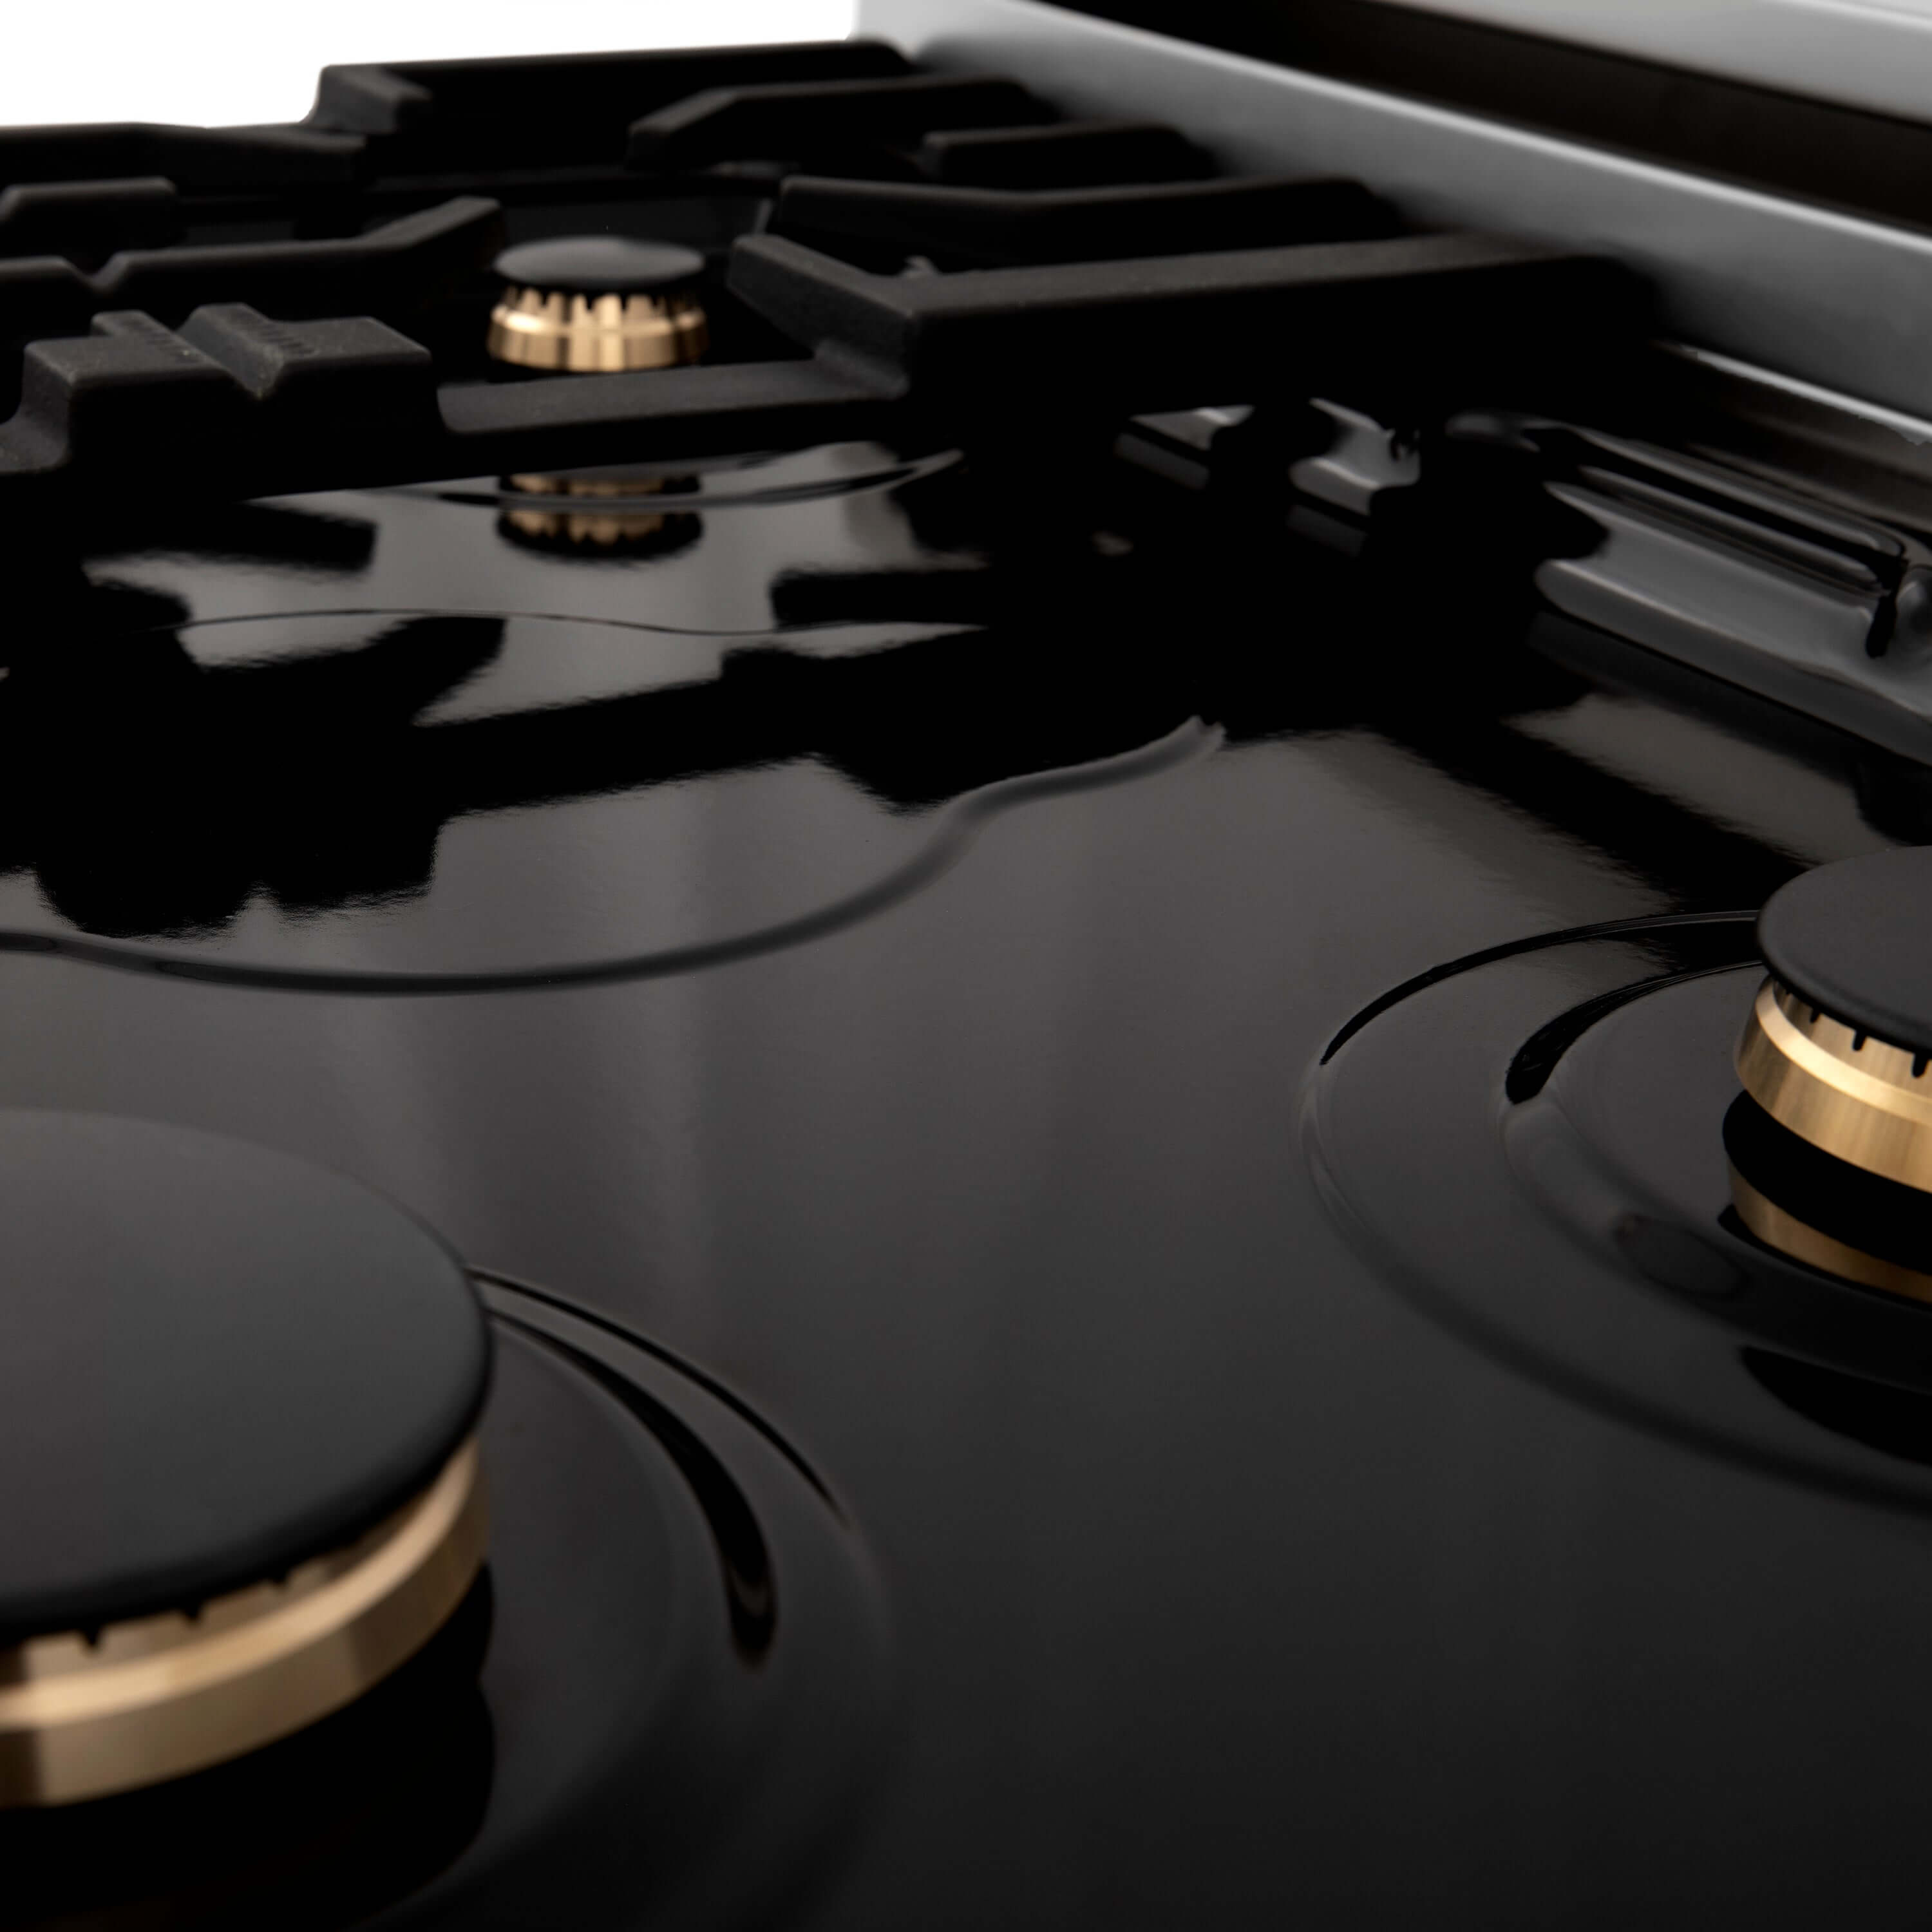 Three ZLINE brass burners on black porcelain cooktop without grates.